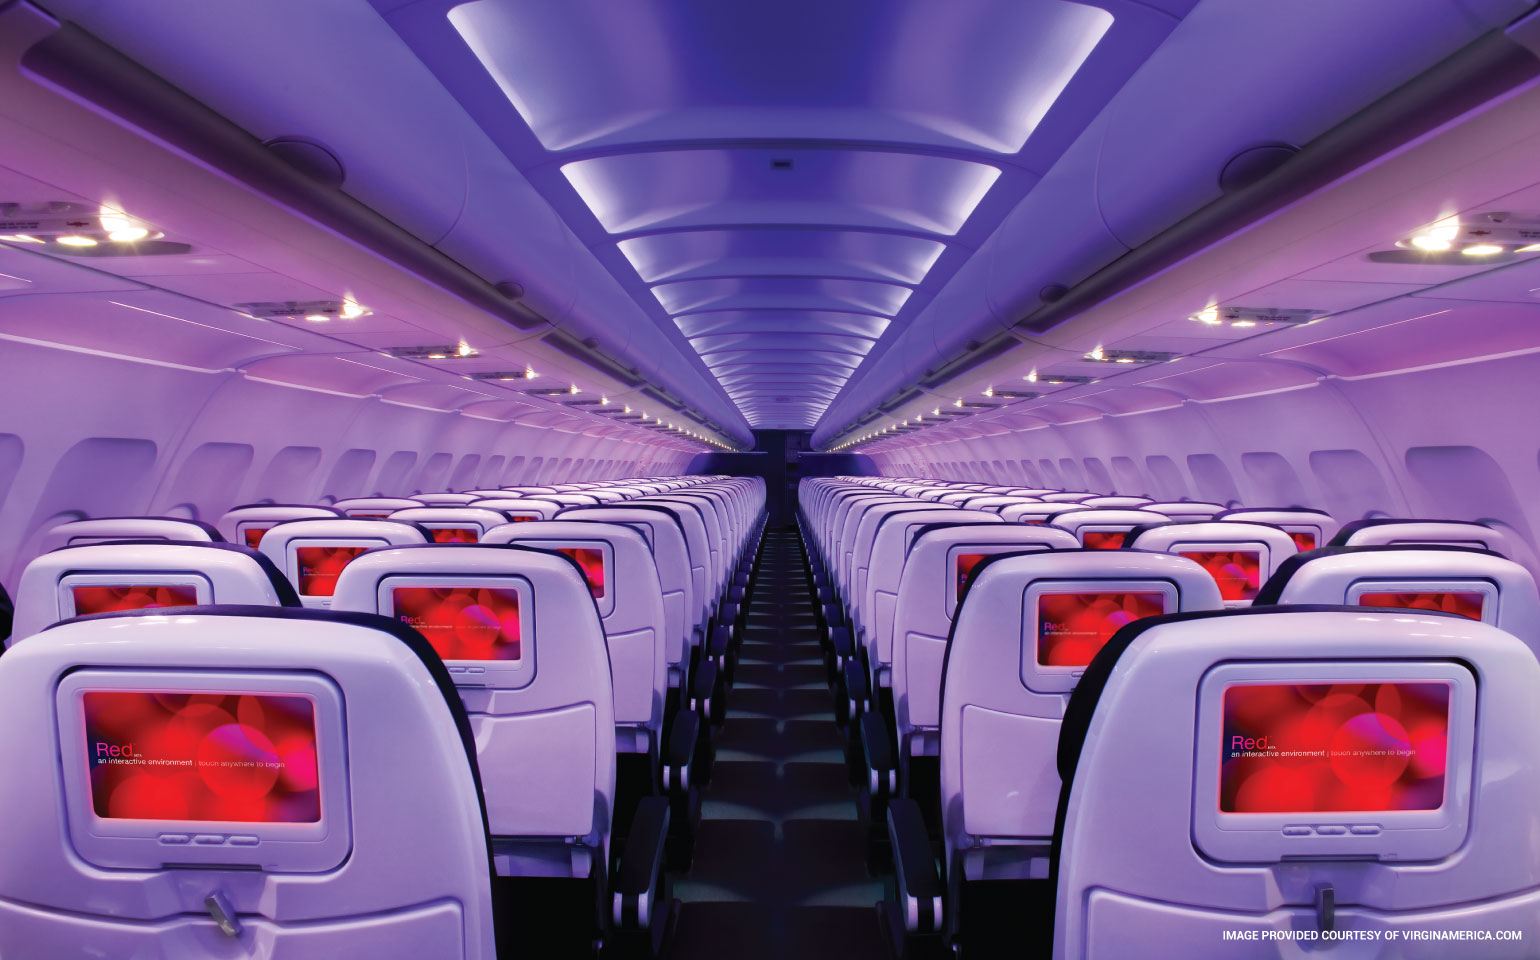 Interior of Virgin America Plane